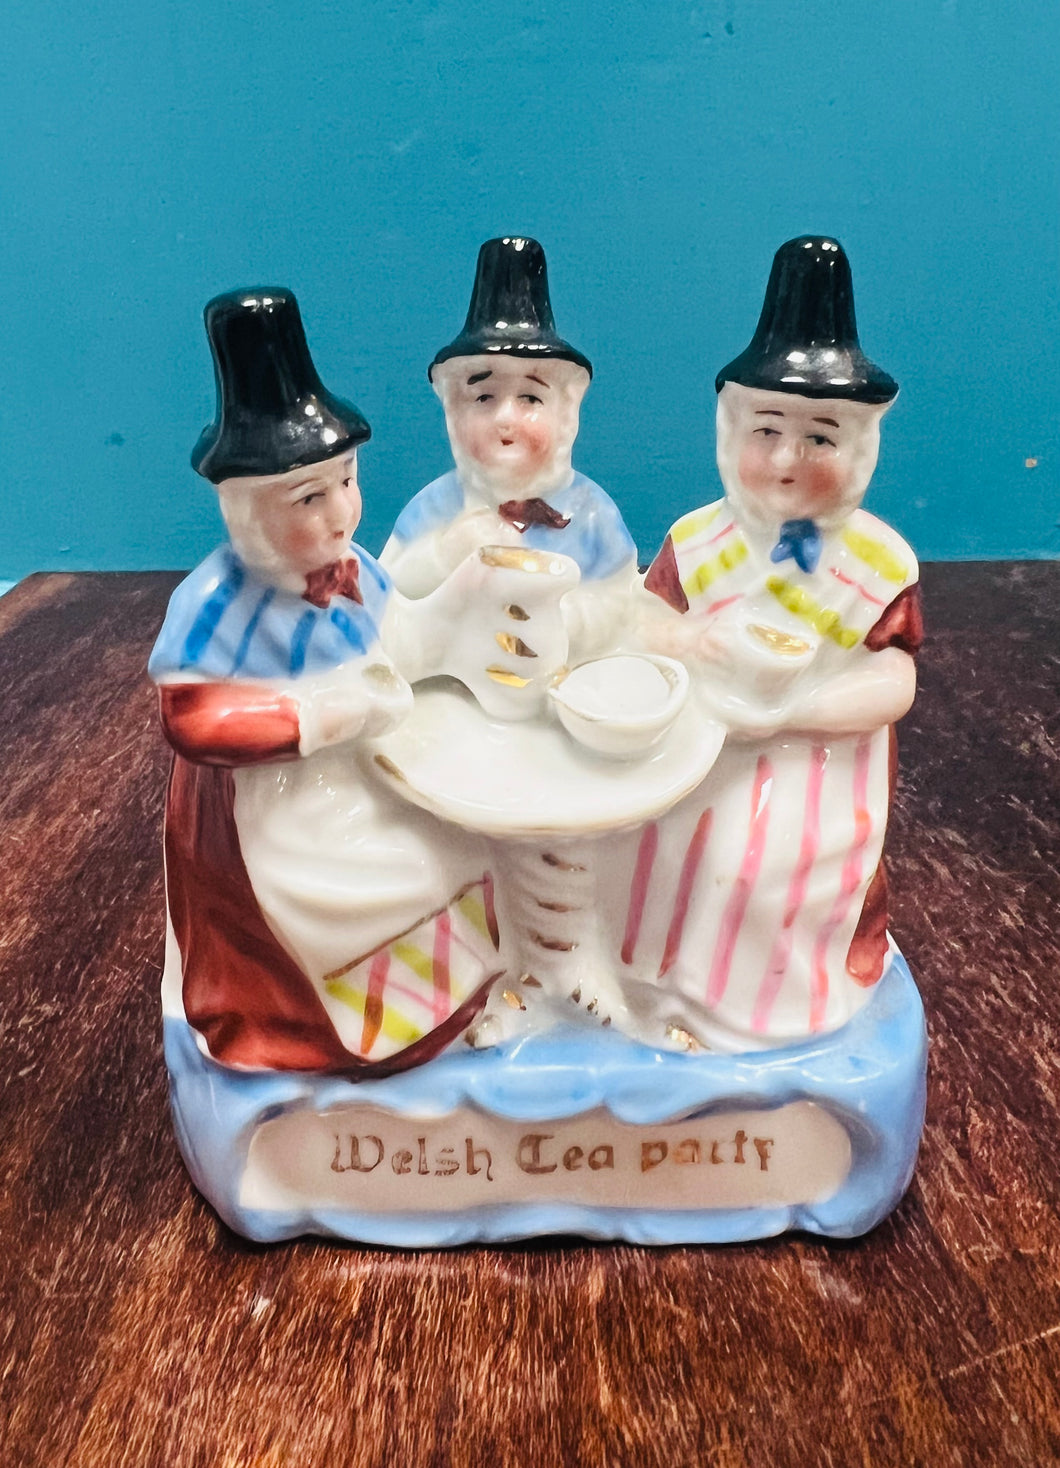 Ornament ‘Welsh Tea Party’ tair Ladi Cymreig Hynafol o’r 19fed ganrif / Antique ‘Welsh Tea Party’ three Welsh Ladies ornament from the 19th century